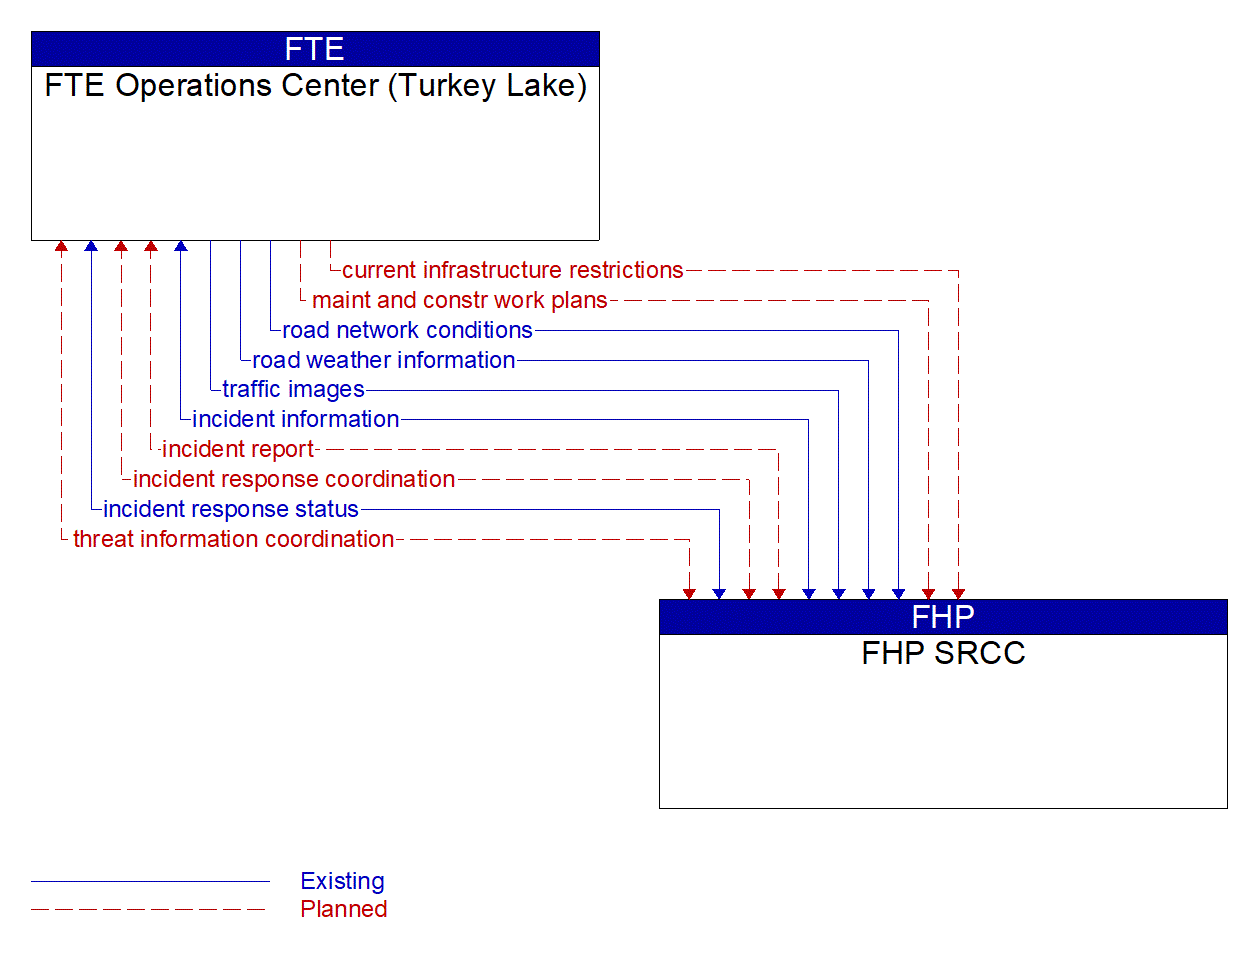 Architecture Flow Diagram: FHP SRCC <--> FTE Operations Center (Turkey Lake)